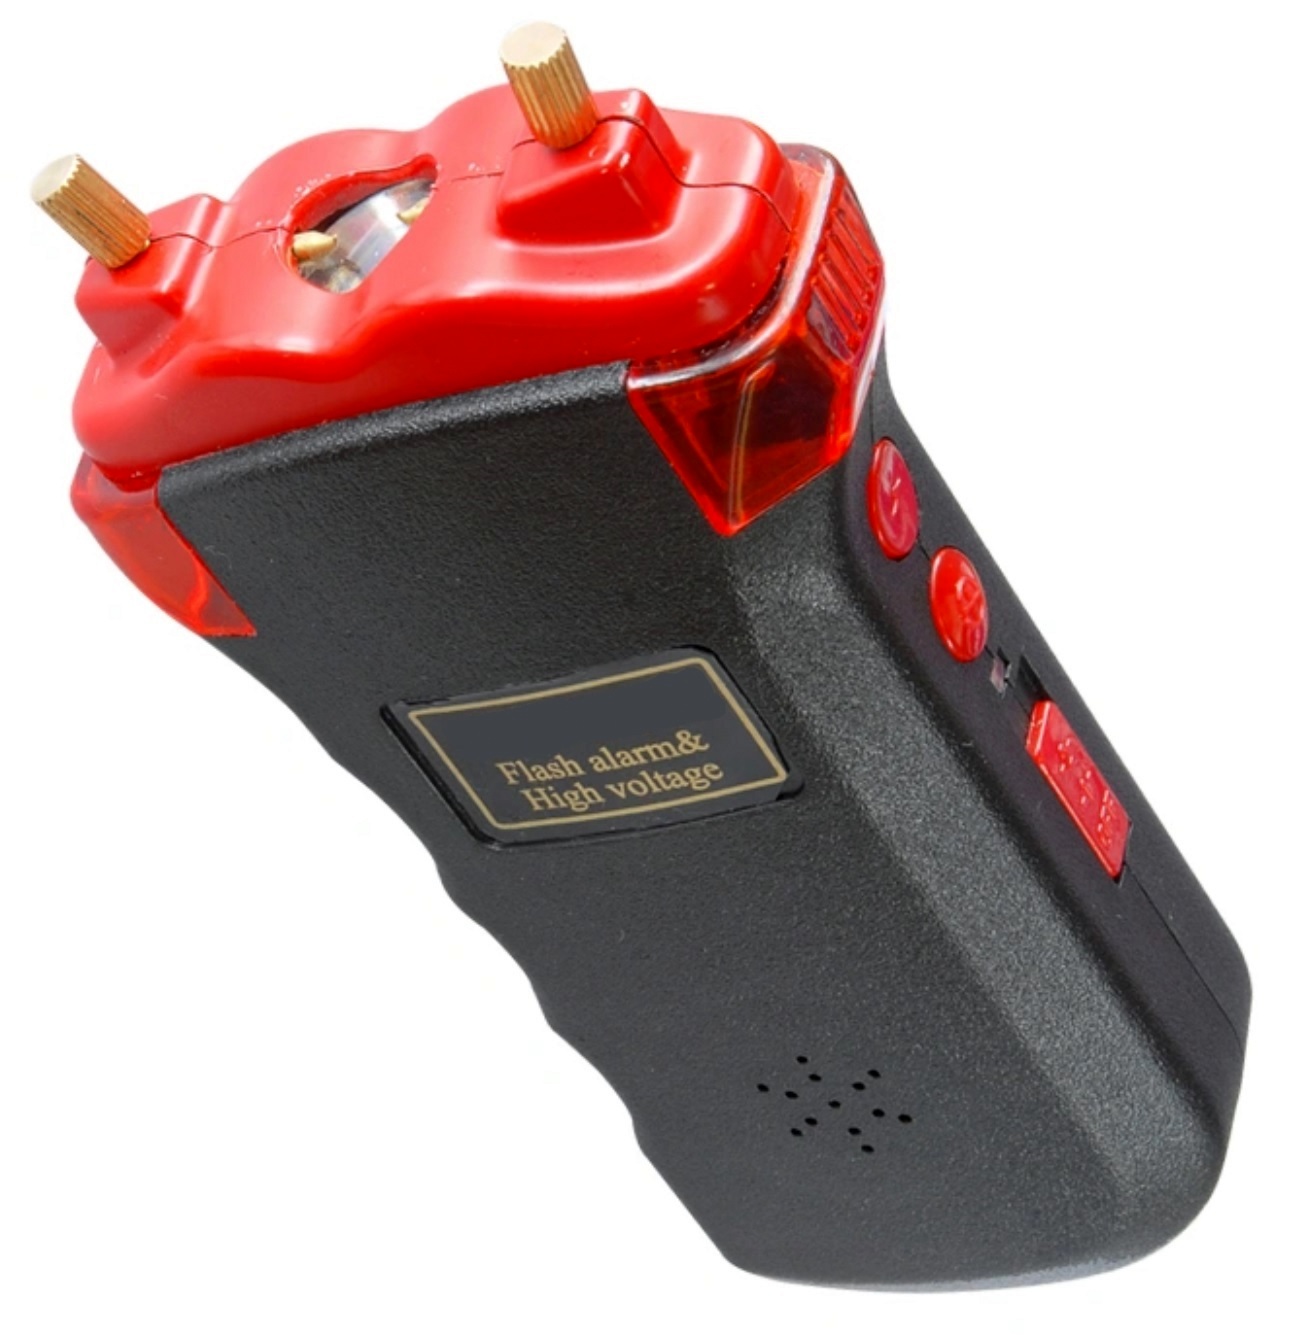 Taser shocker électrique + alarme - Tazer 5 000 000 volts !